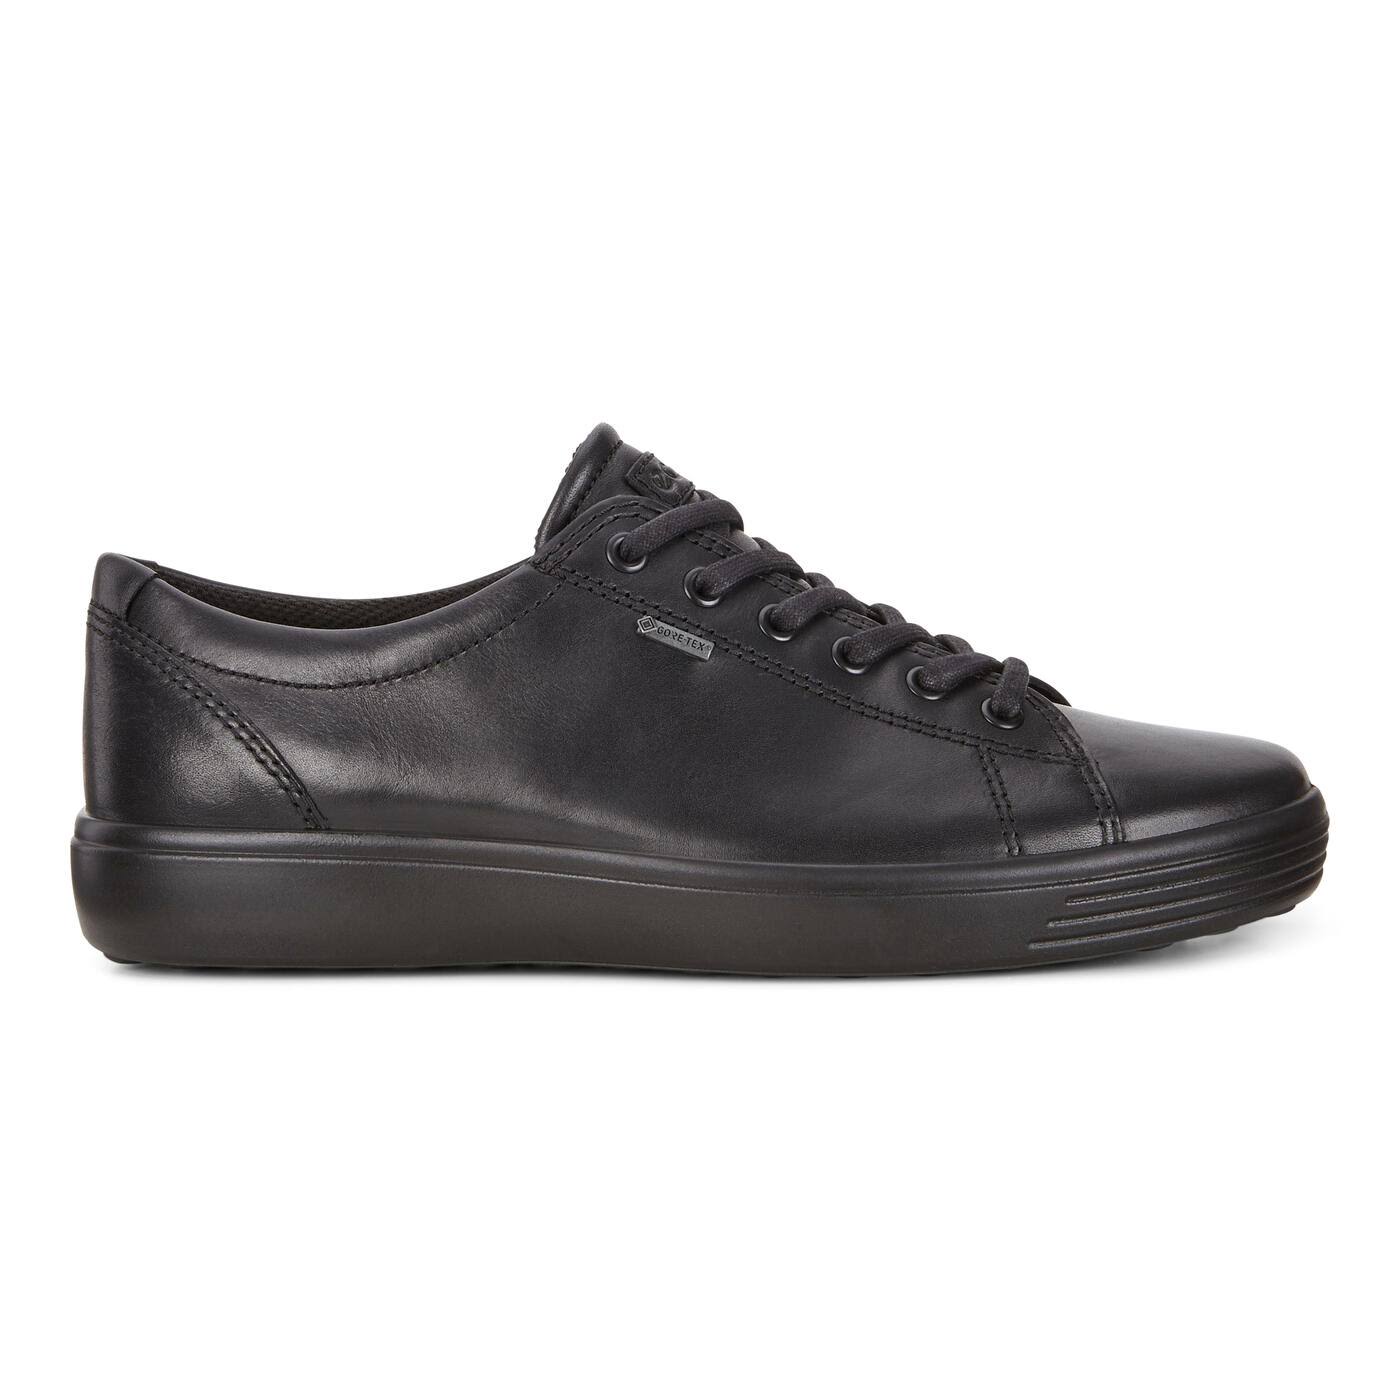 Ecco Women's Soft VII Sneakers - Black, 7.5 UK